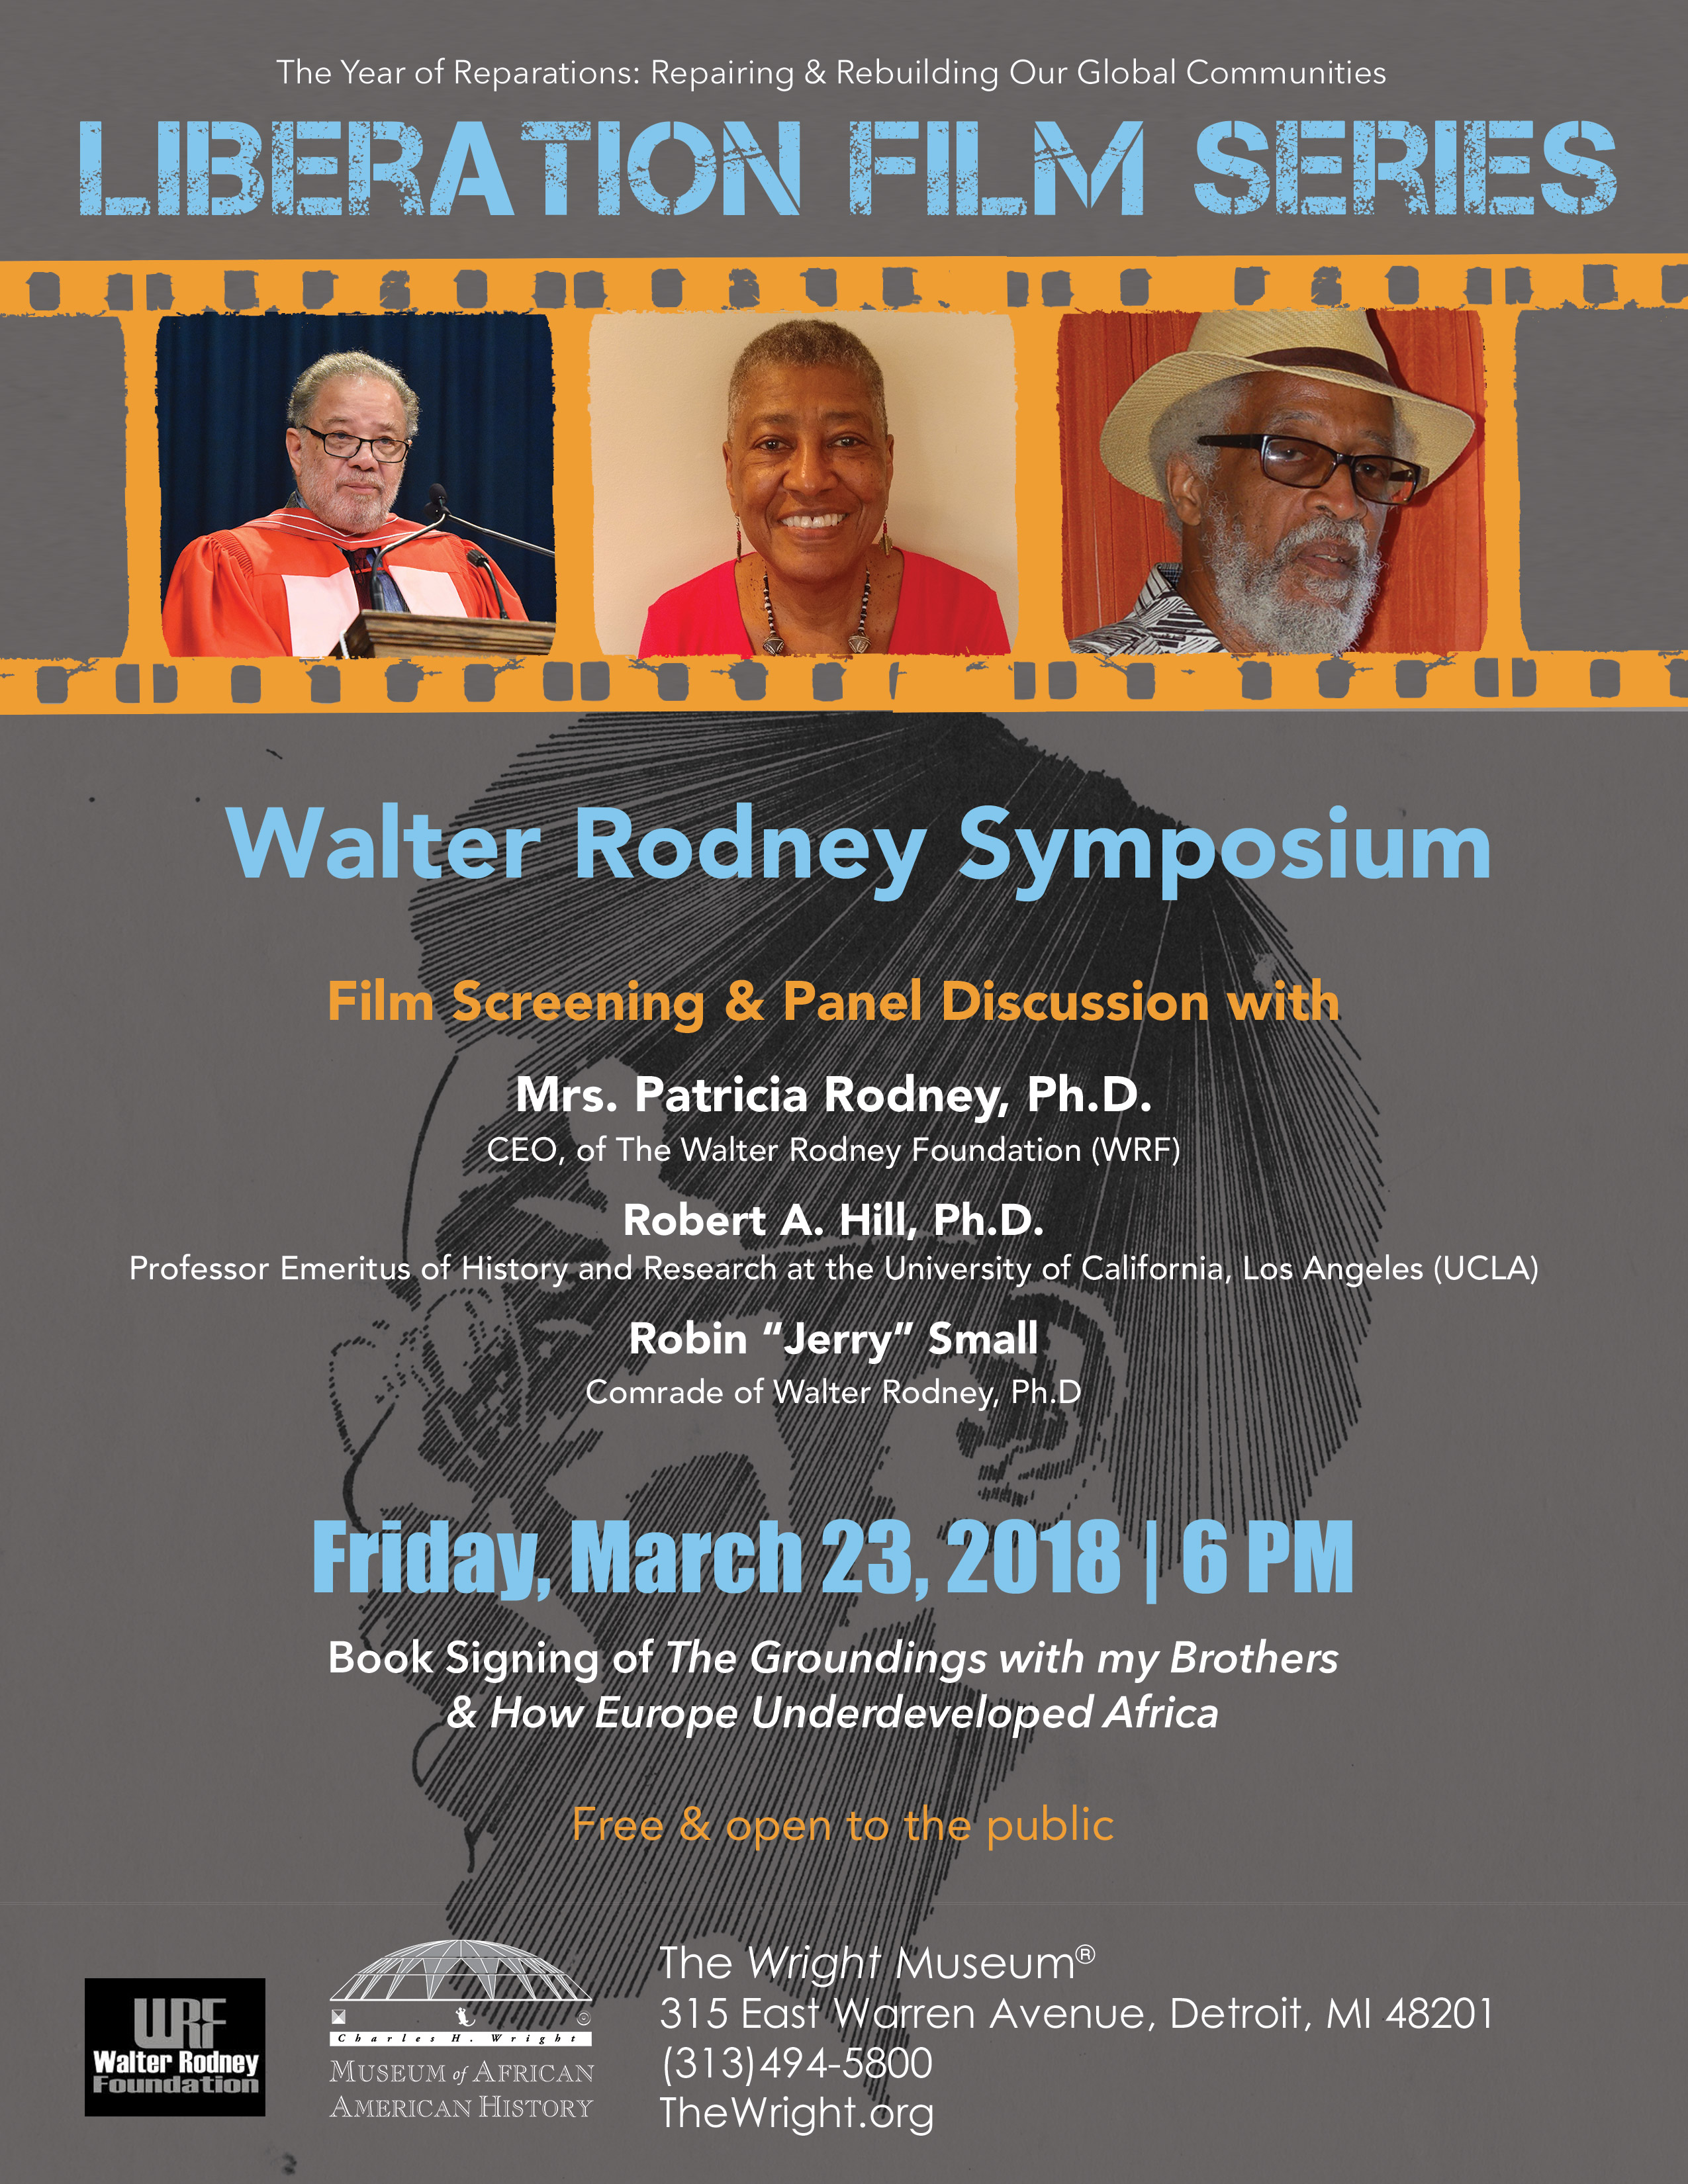 Walter Rodney Symposium